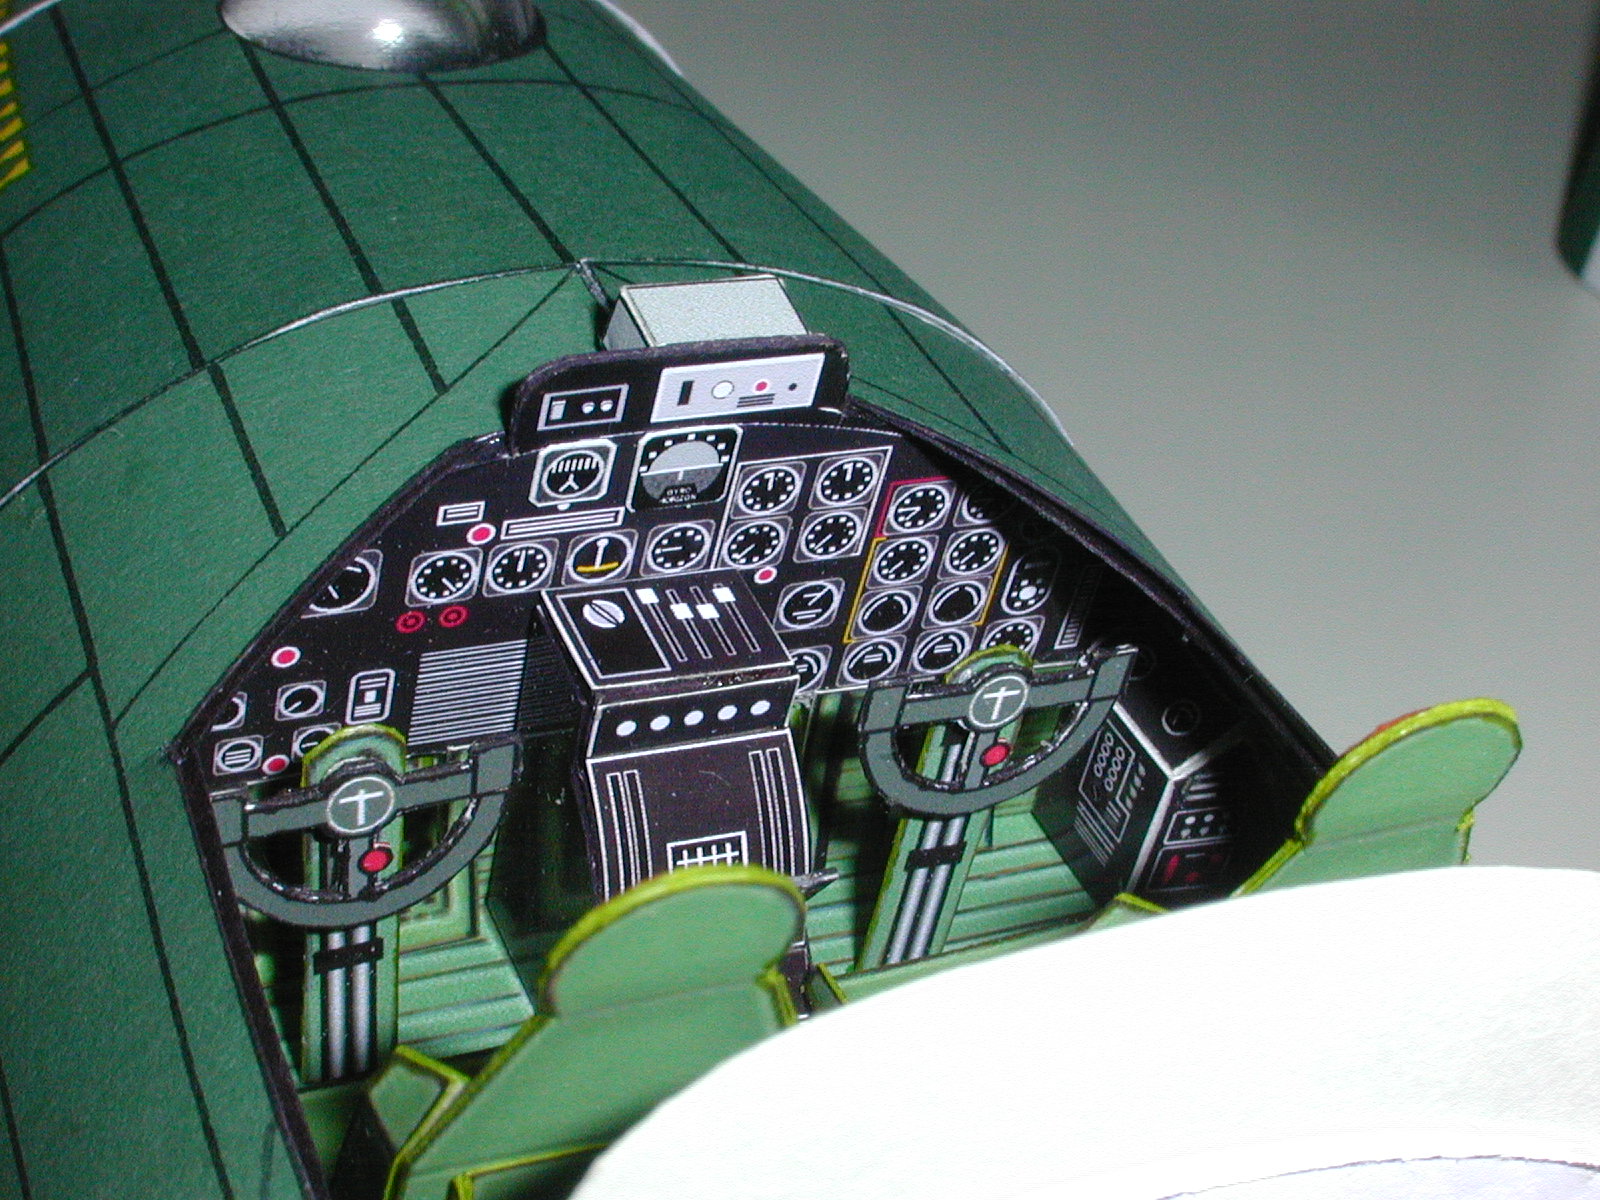 B17 custom cockpit